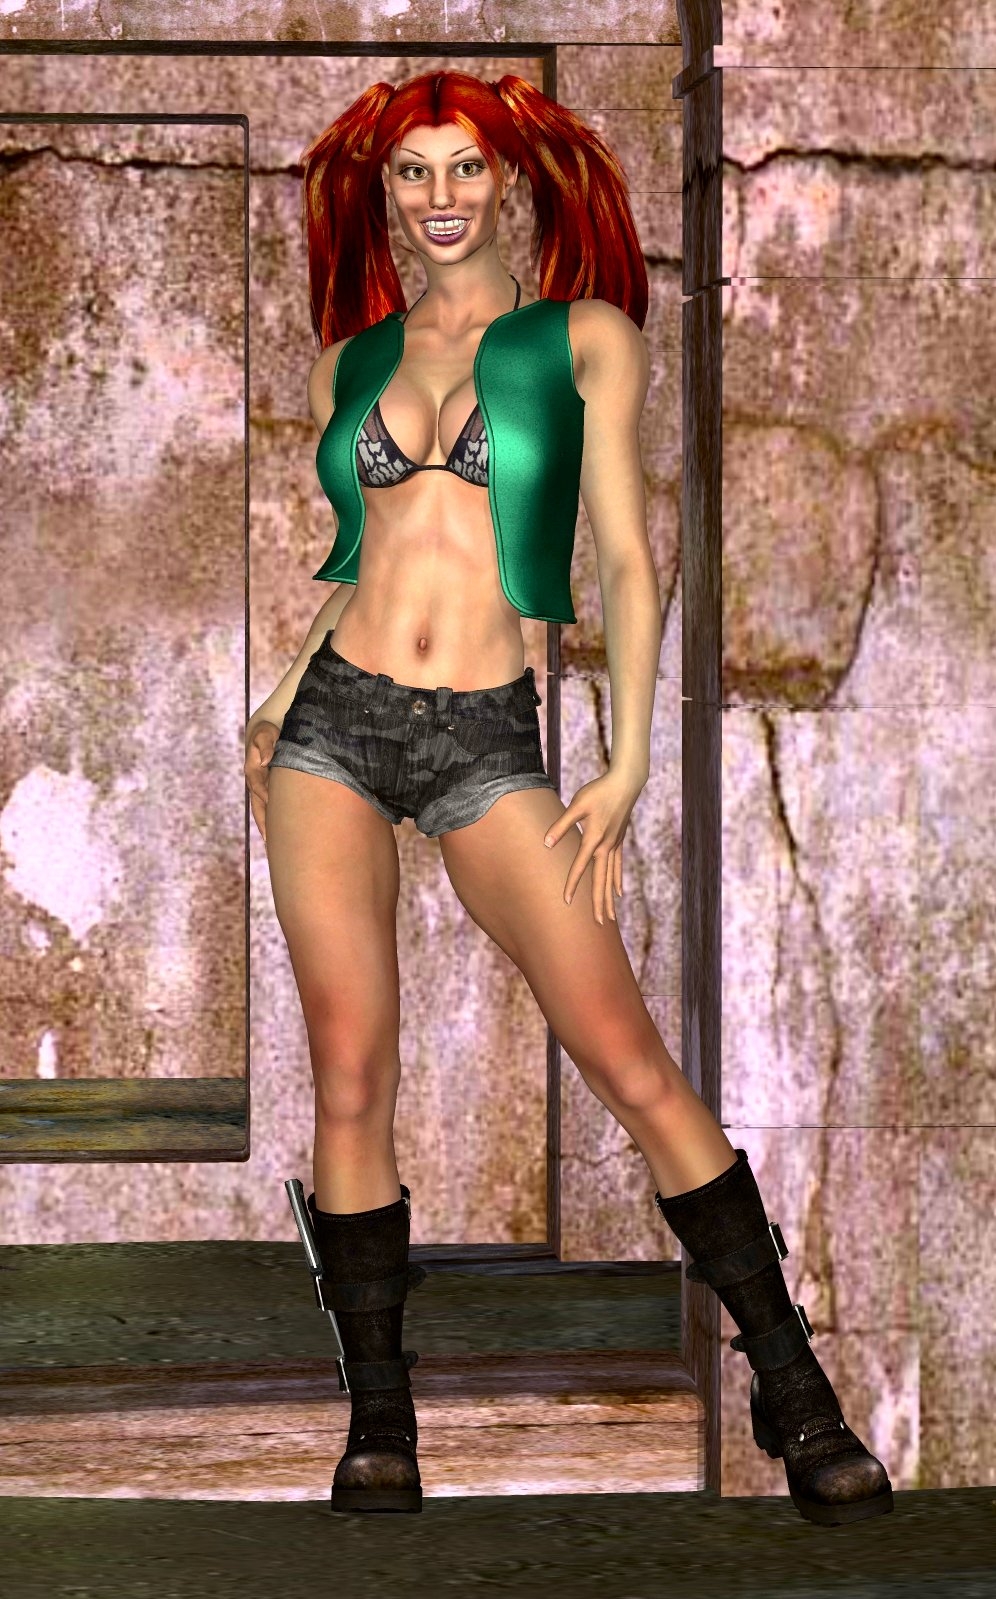 CleonXXI / Ricklinkous - Lara Croft 3D pics collection 174